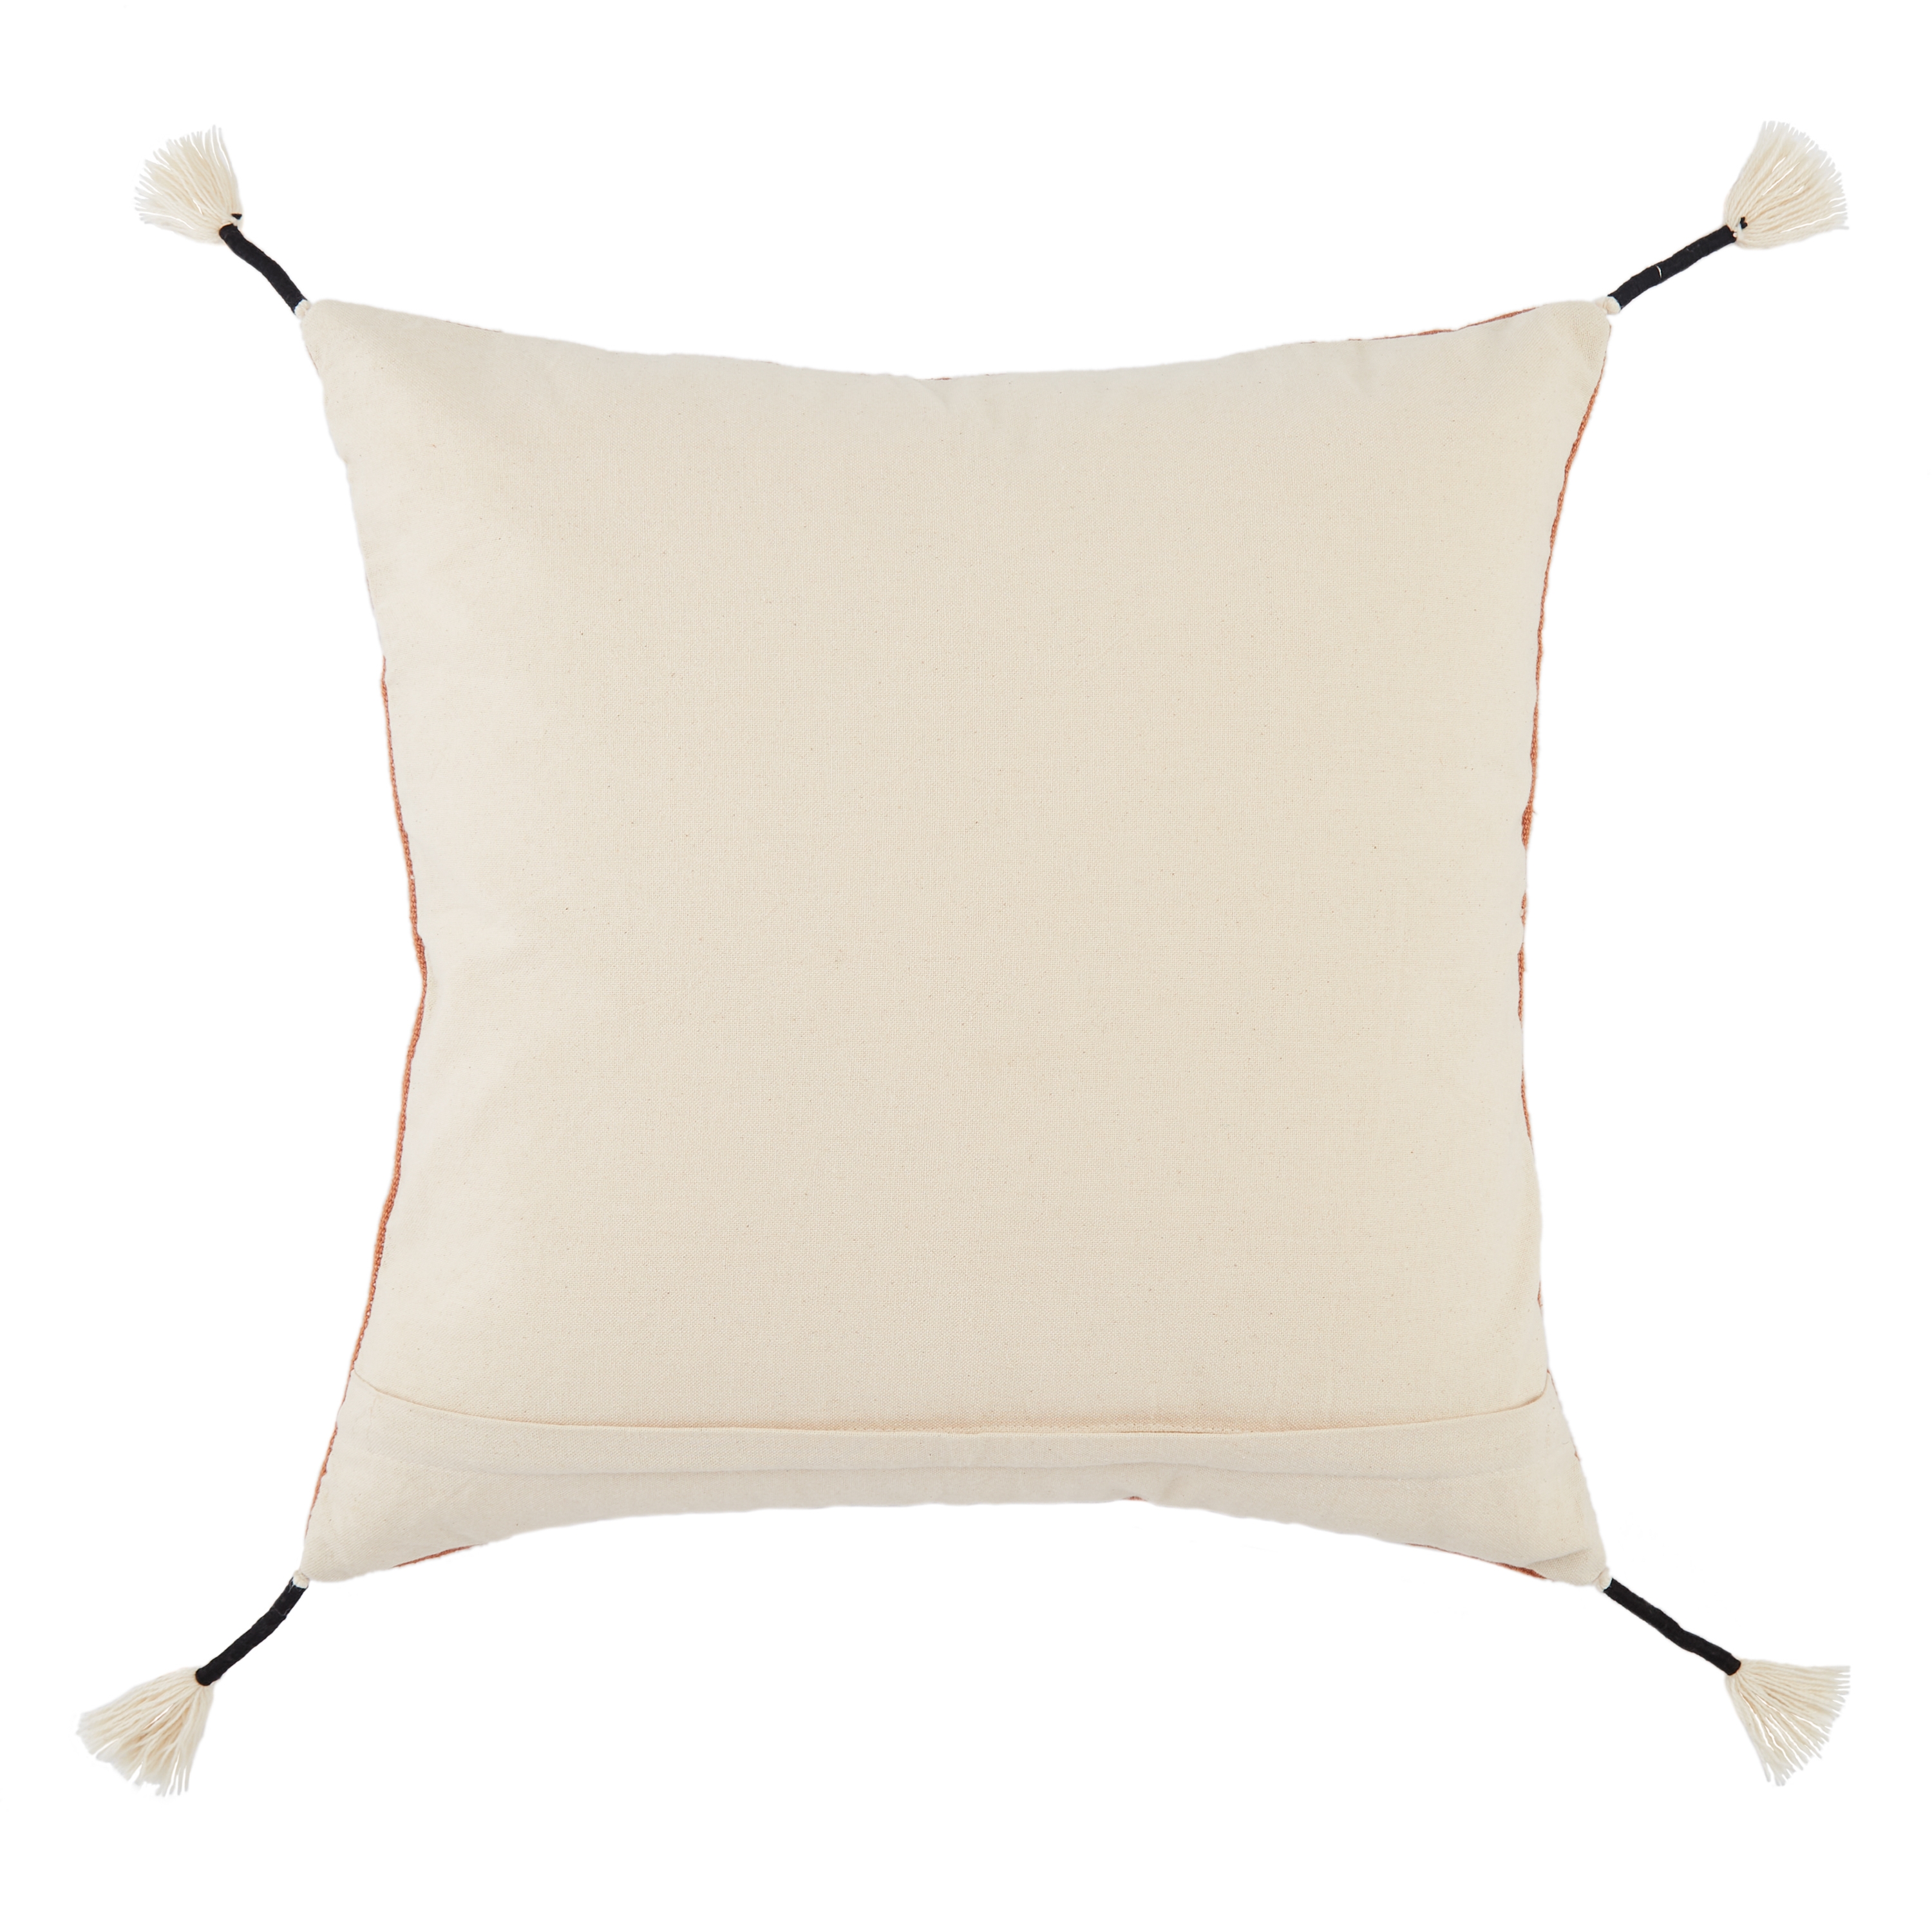 Design (US) Terracotta 18"X18" Pillow - Image 1